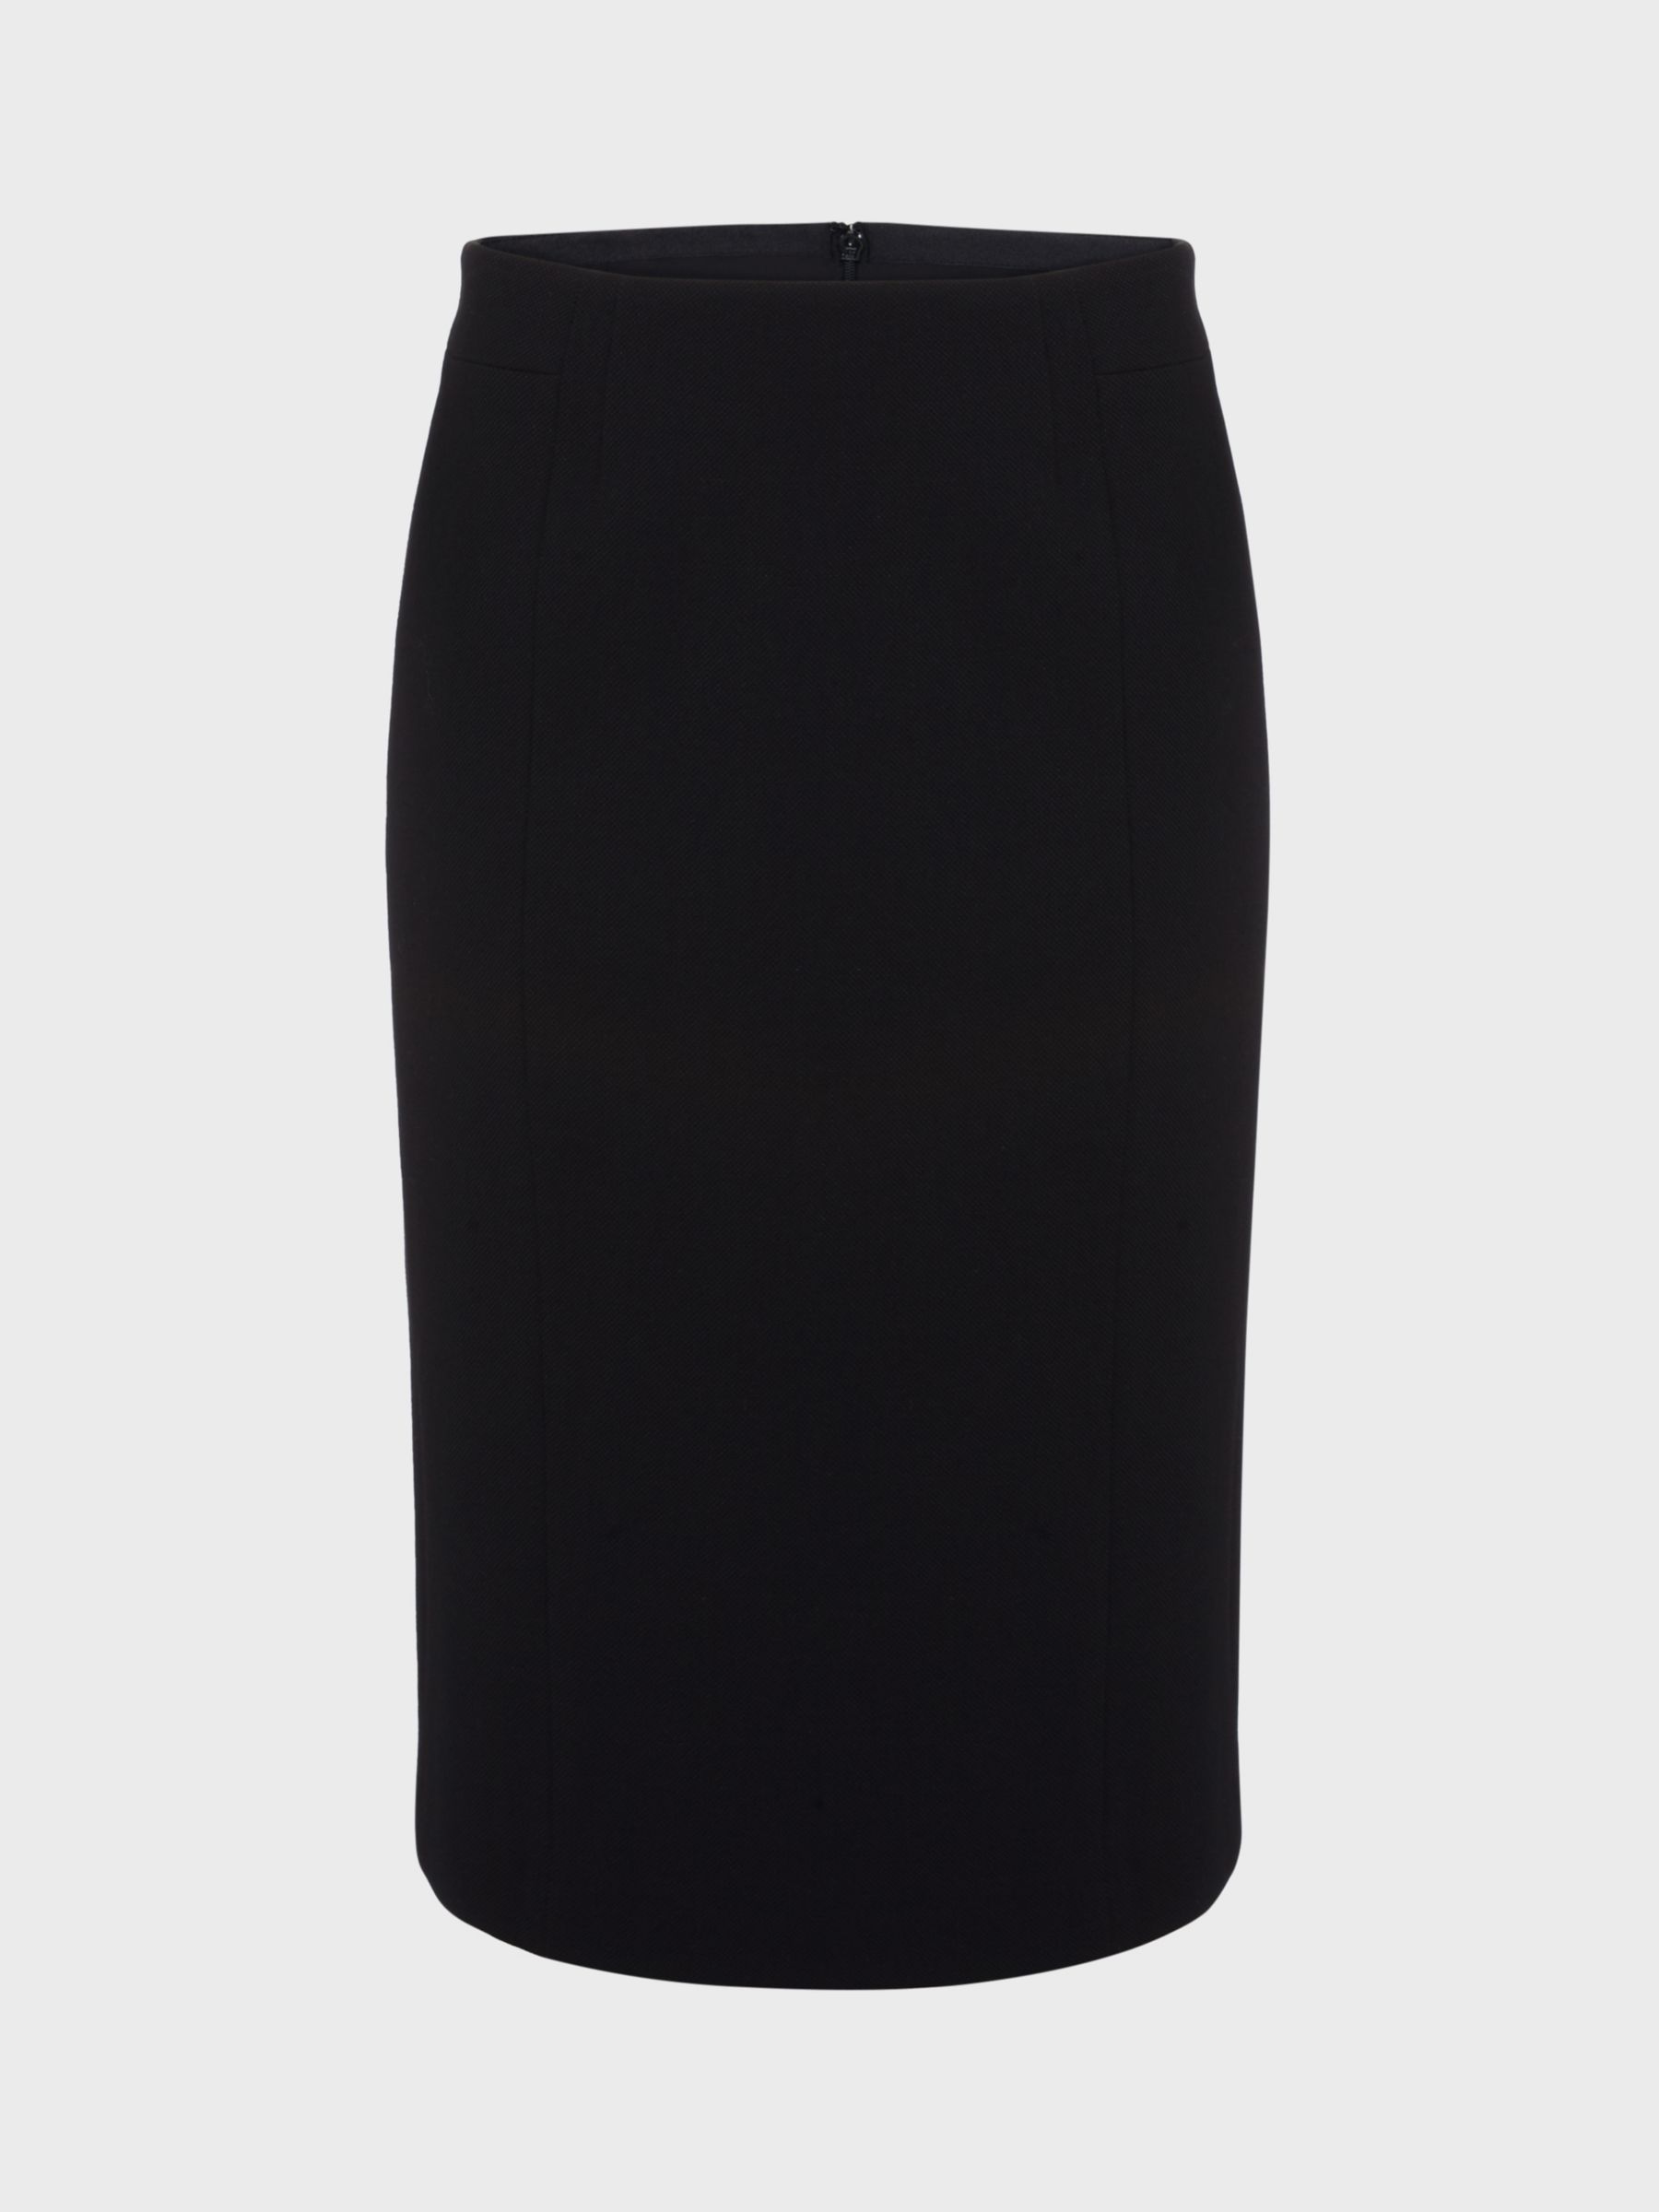 Hobbs Tailored Charley Skirt, Black at John Lewis & Partners